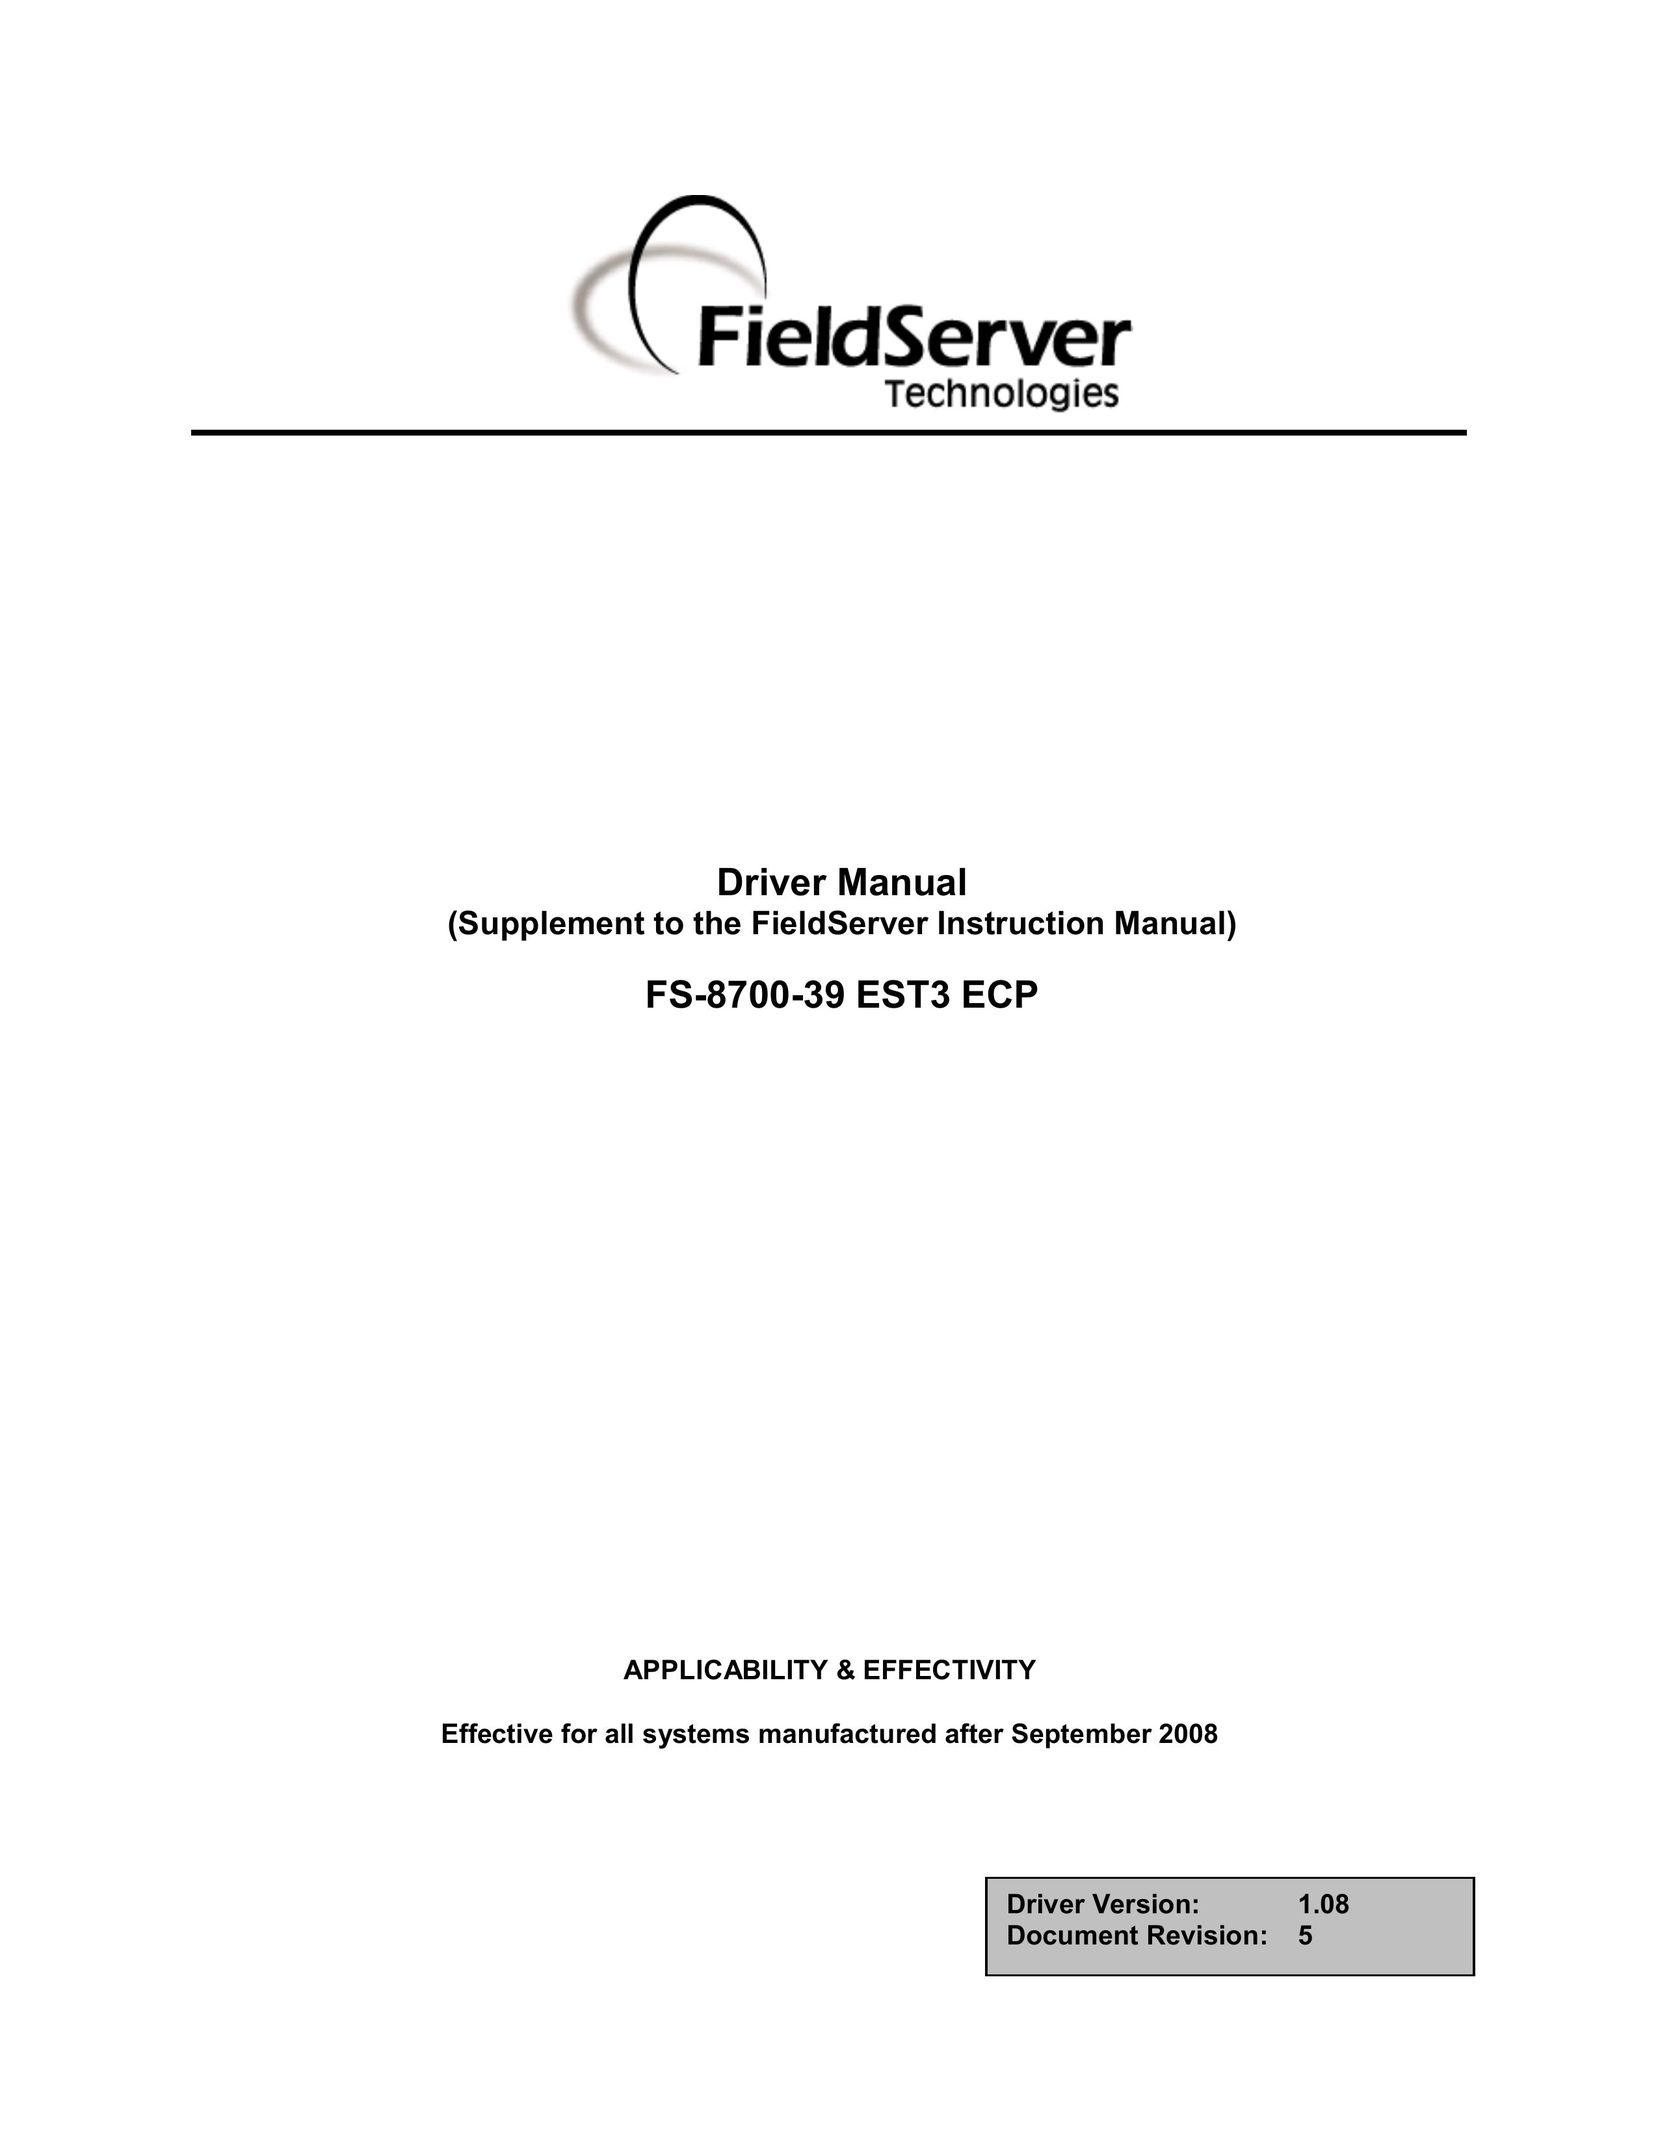 FieldServer FS-8700-39 Computer Drive User Manual